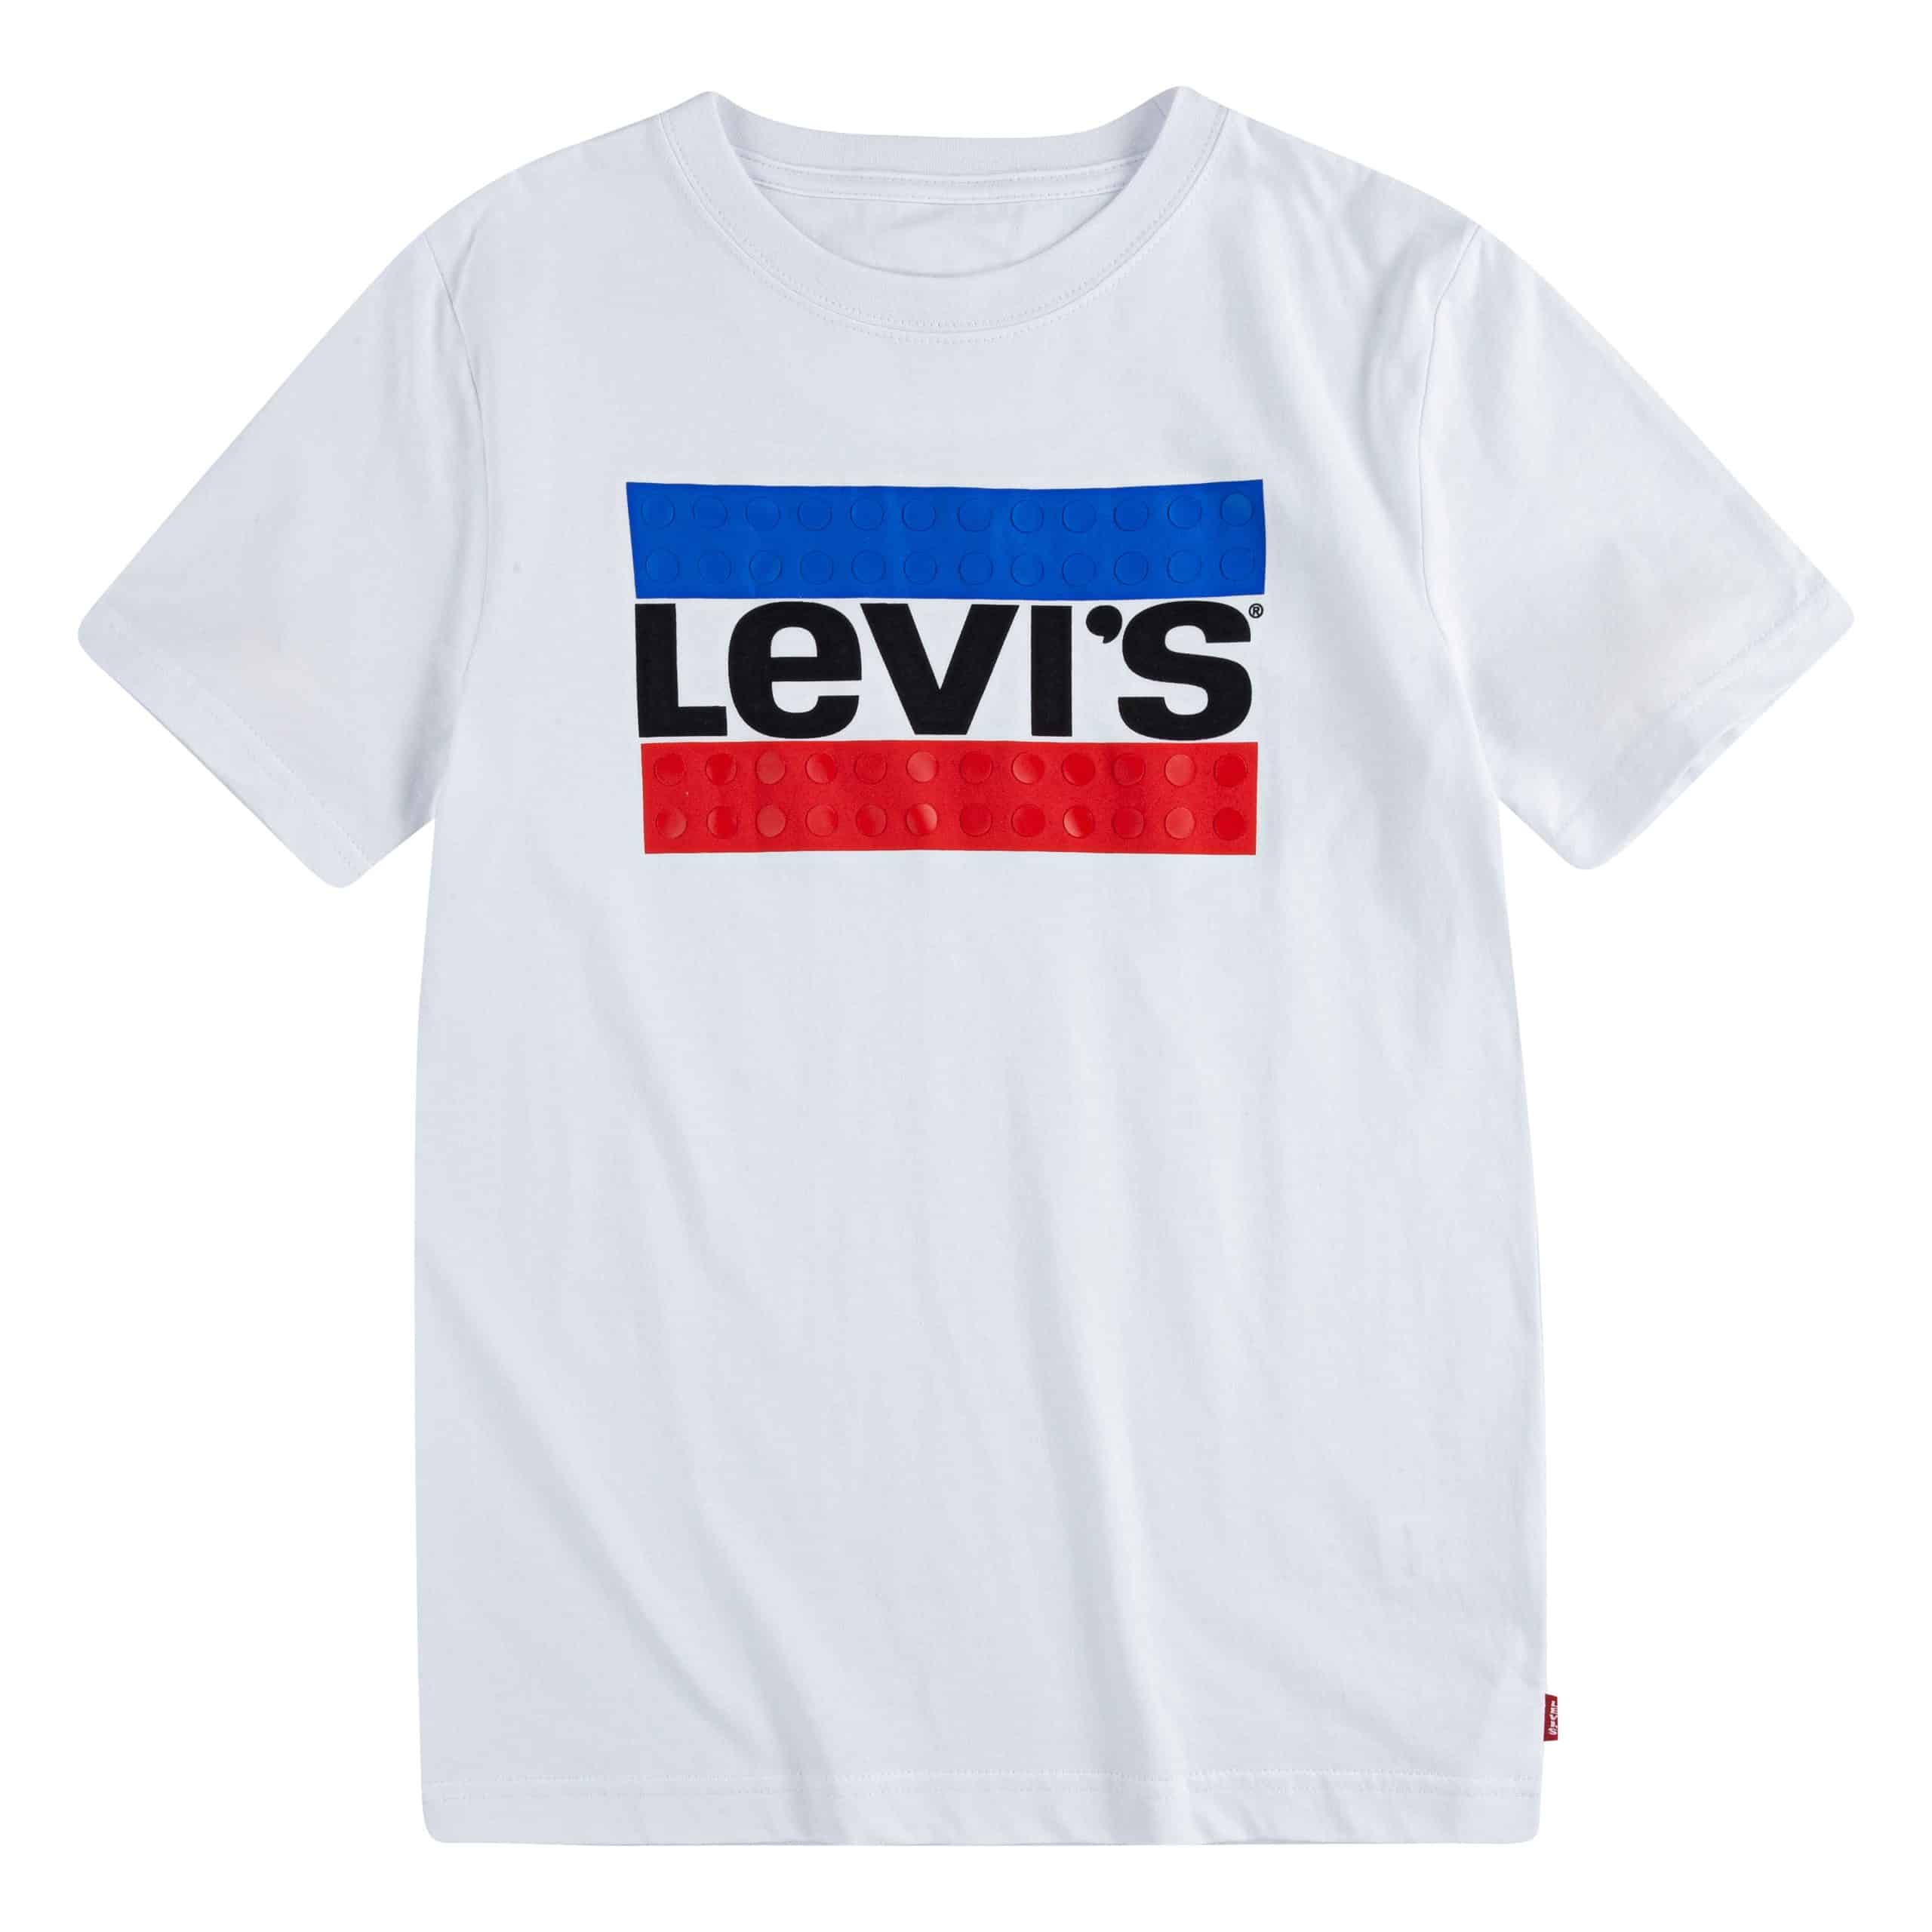 levis x lego 5006398 boys 8a 14 logo t shirt scaled